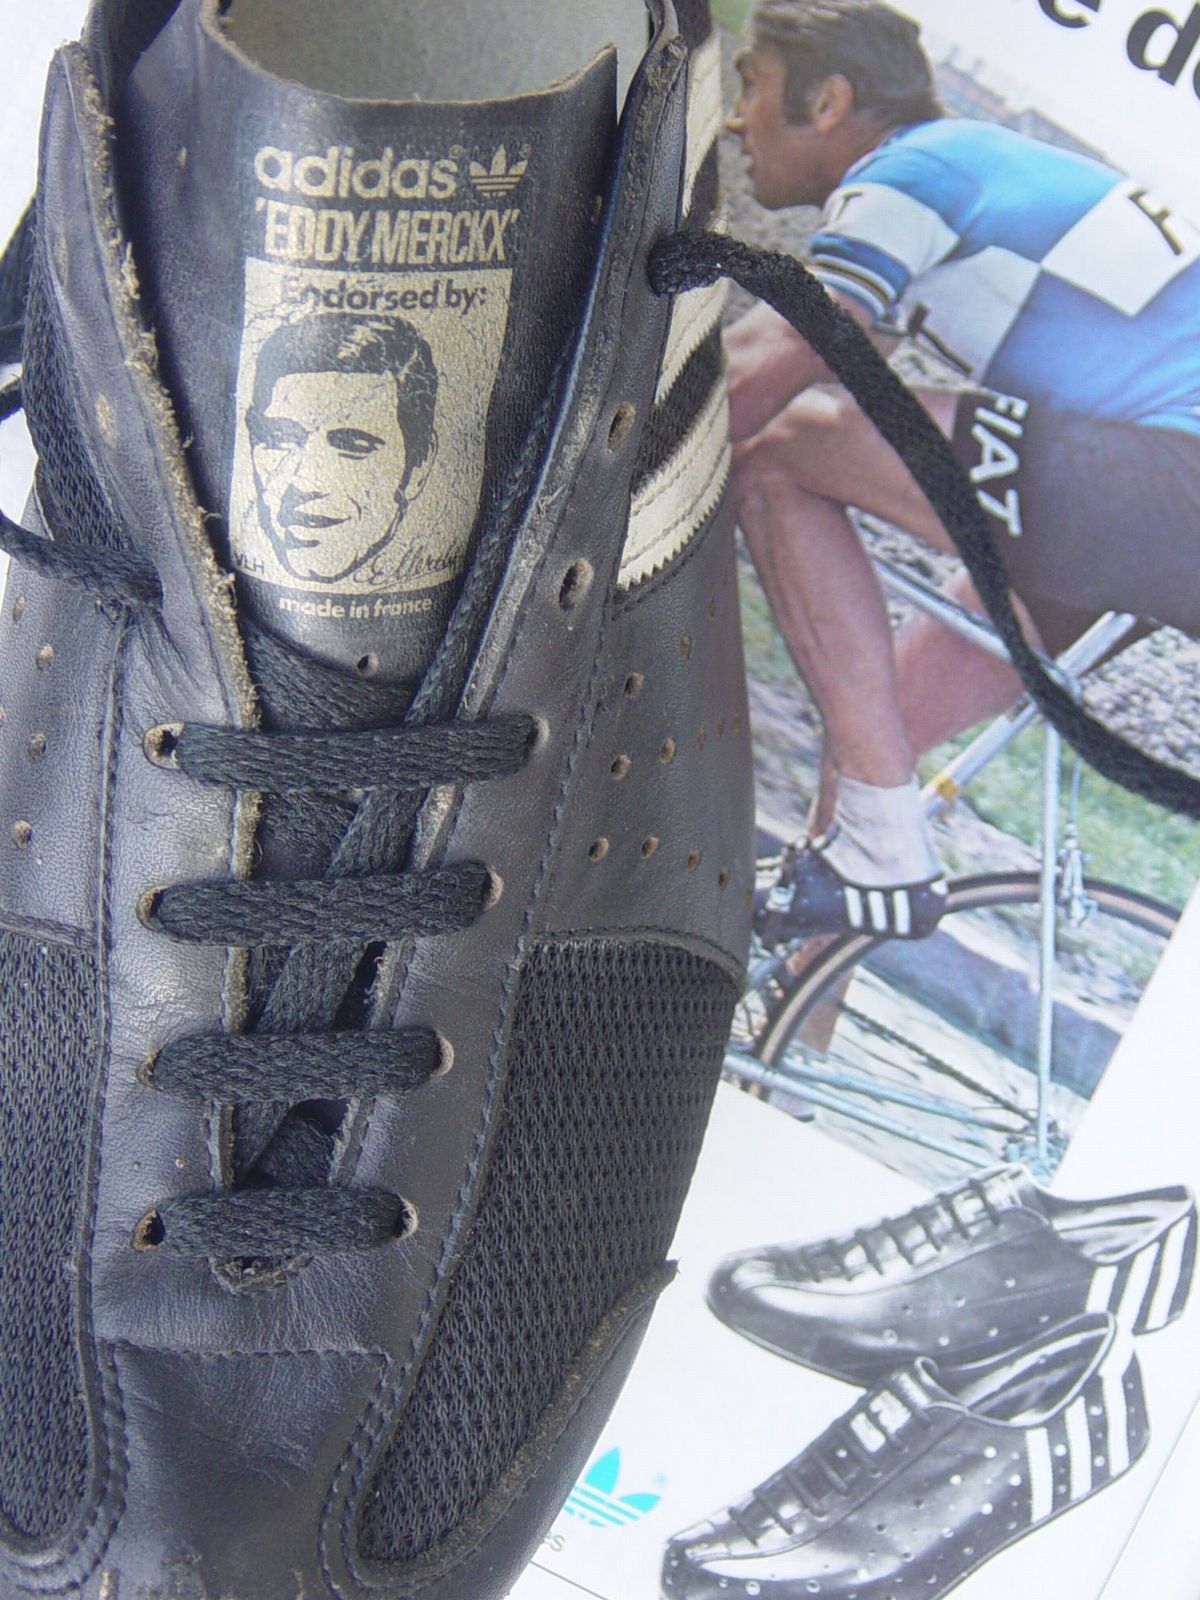 Languette chaussure "Adidas" Eddy MERCKX.